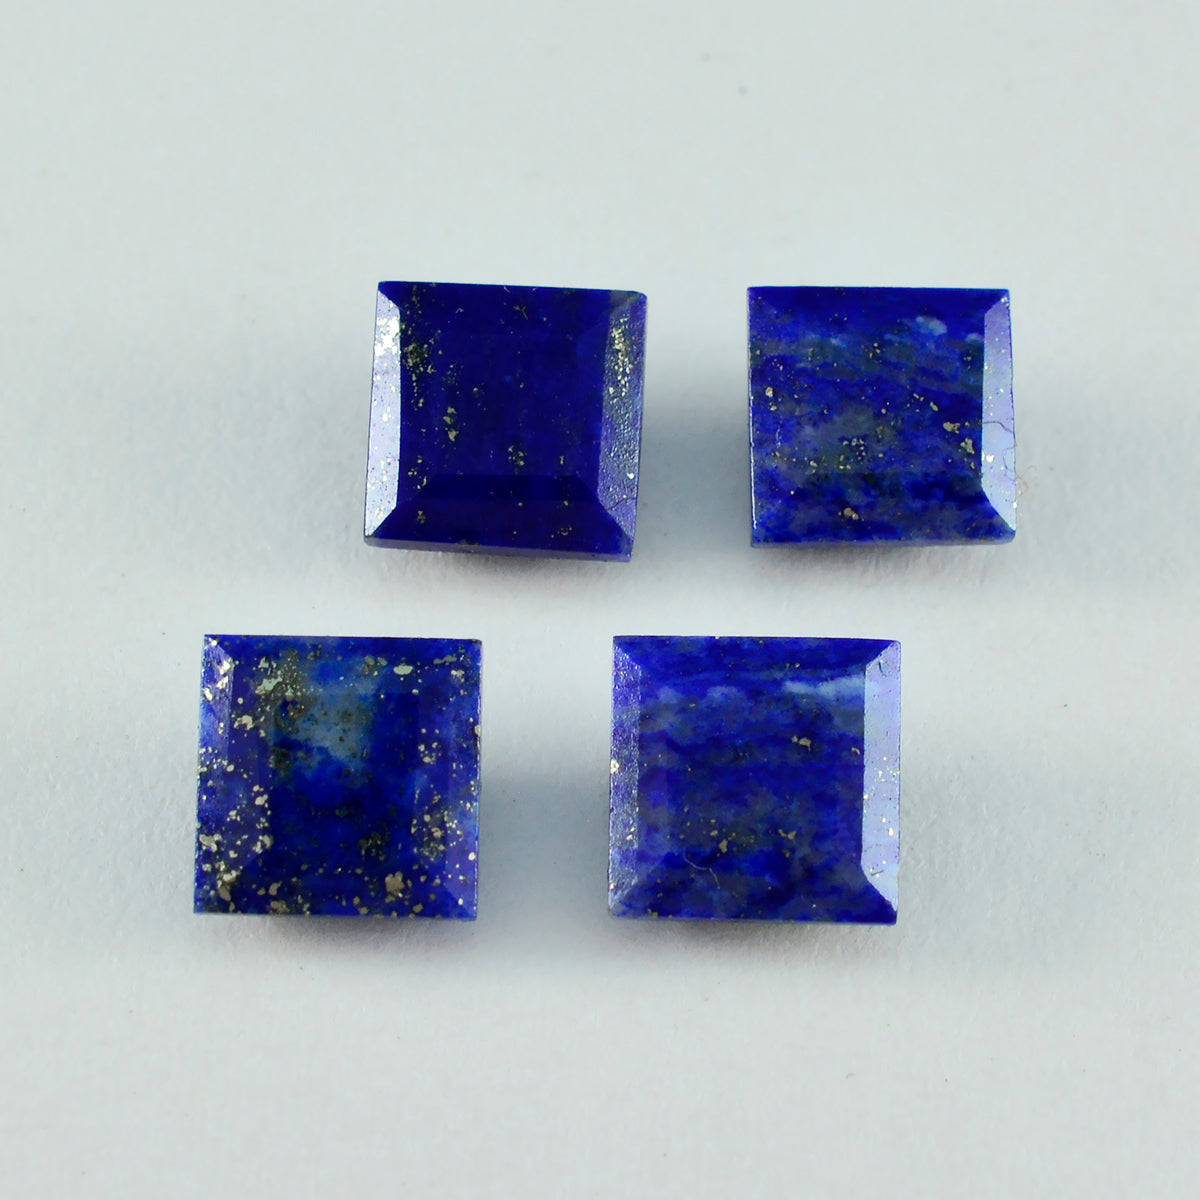 Riyogems 1PC Echte Blauwe Lapis Lazuli Facet 9x9 mm Vierkante Vorm verbazingwekkende Kwaliteit Edelsteen